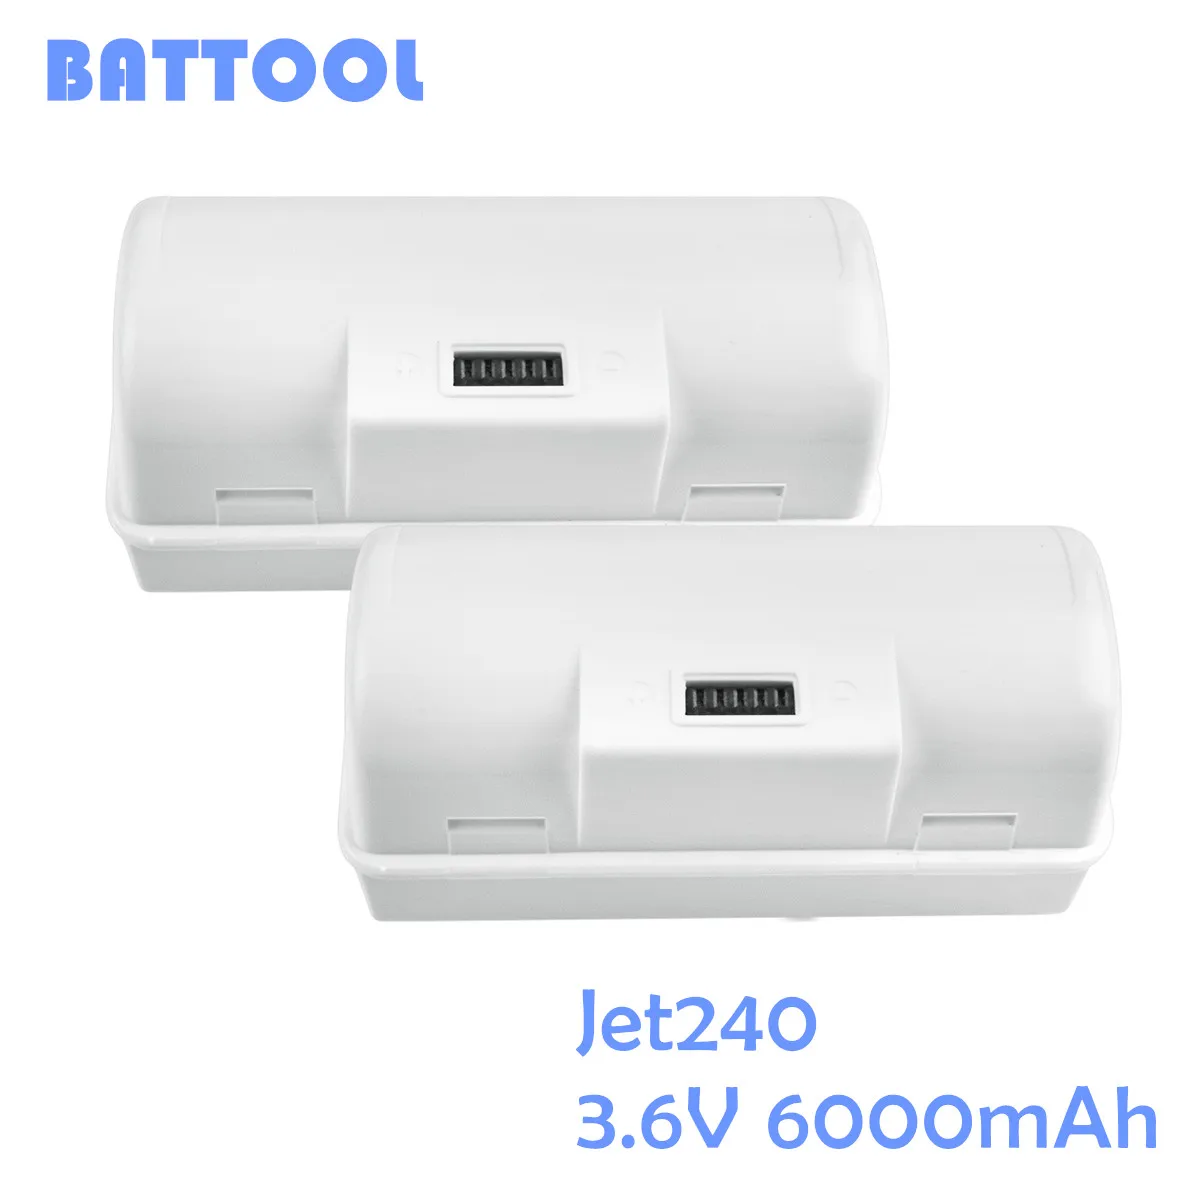 

BATTOOL 3.6V 6000mAh Jet240 Jet 240 Battery for iRobot Braava Jet240 241 244 battery 4446040 floor Mopping Robots BC674 L20